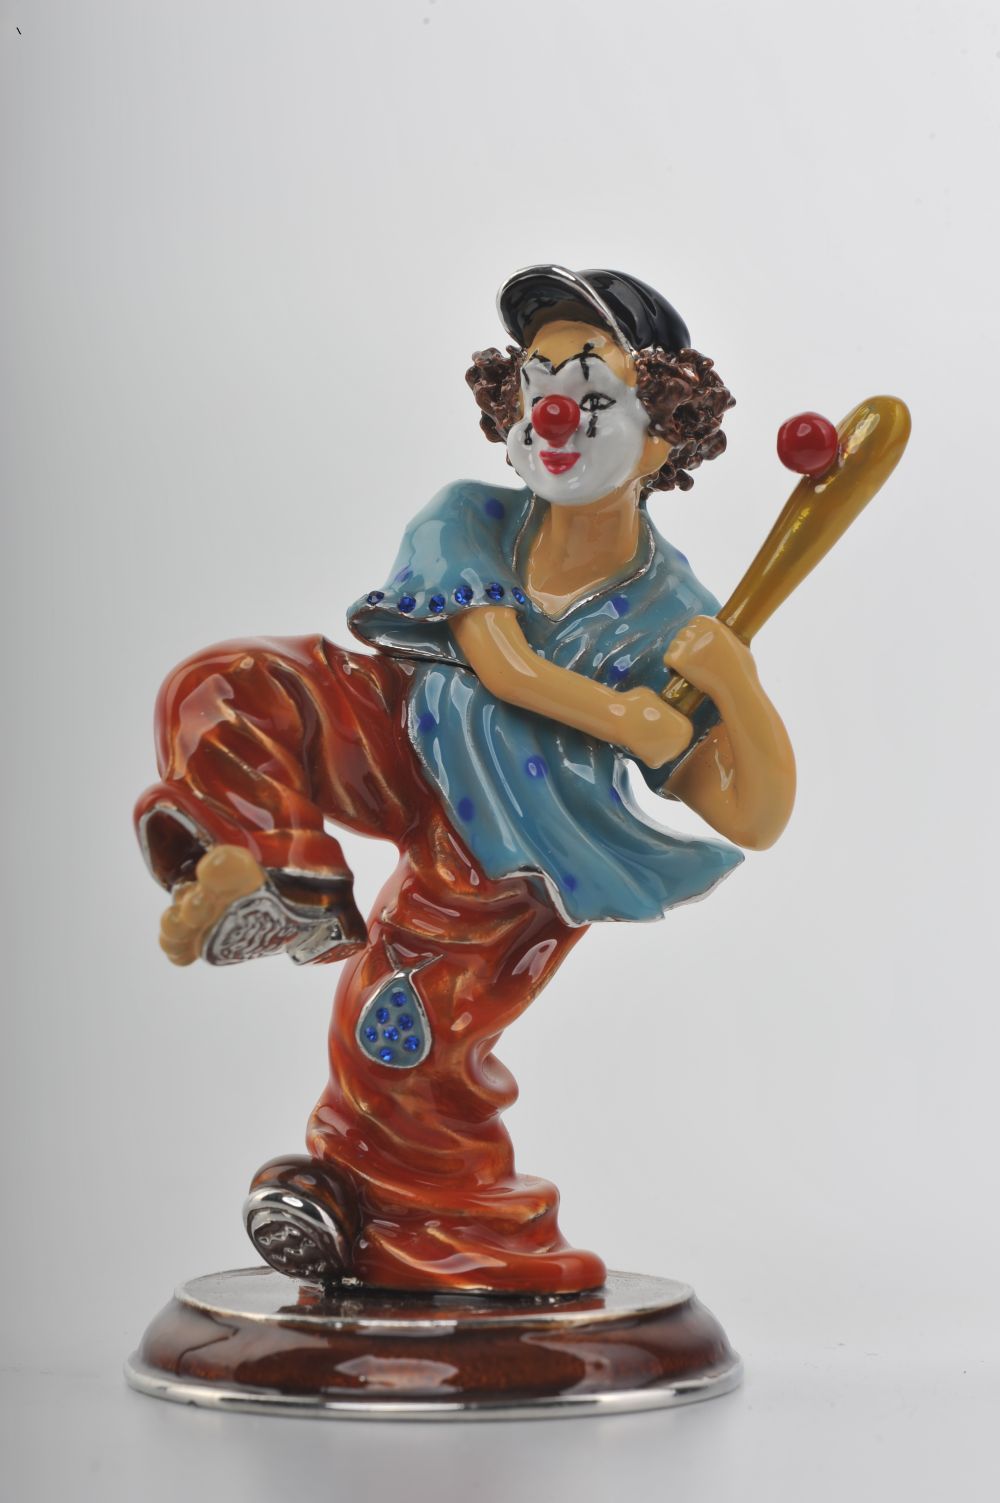 Keren Kopal Circus Clown Playing Baseball  89.00